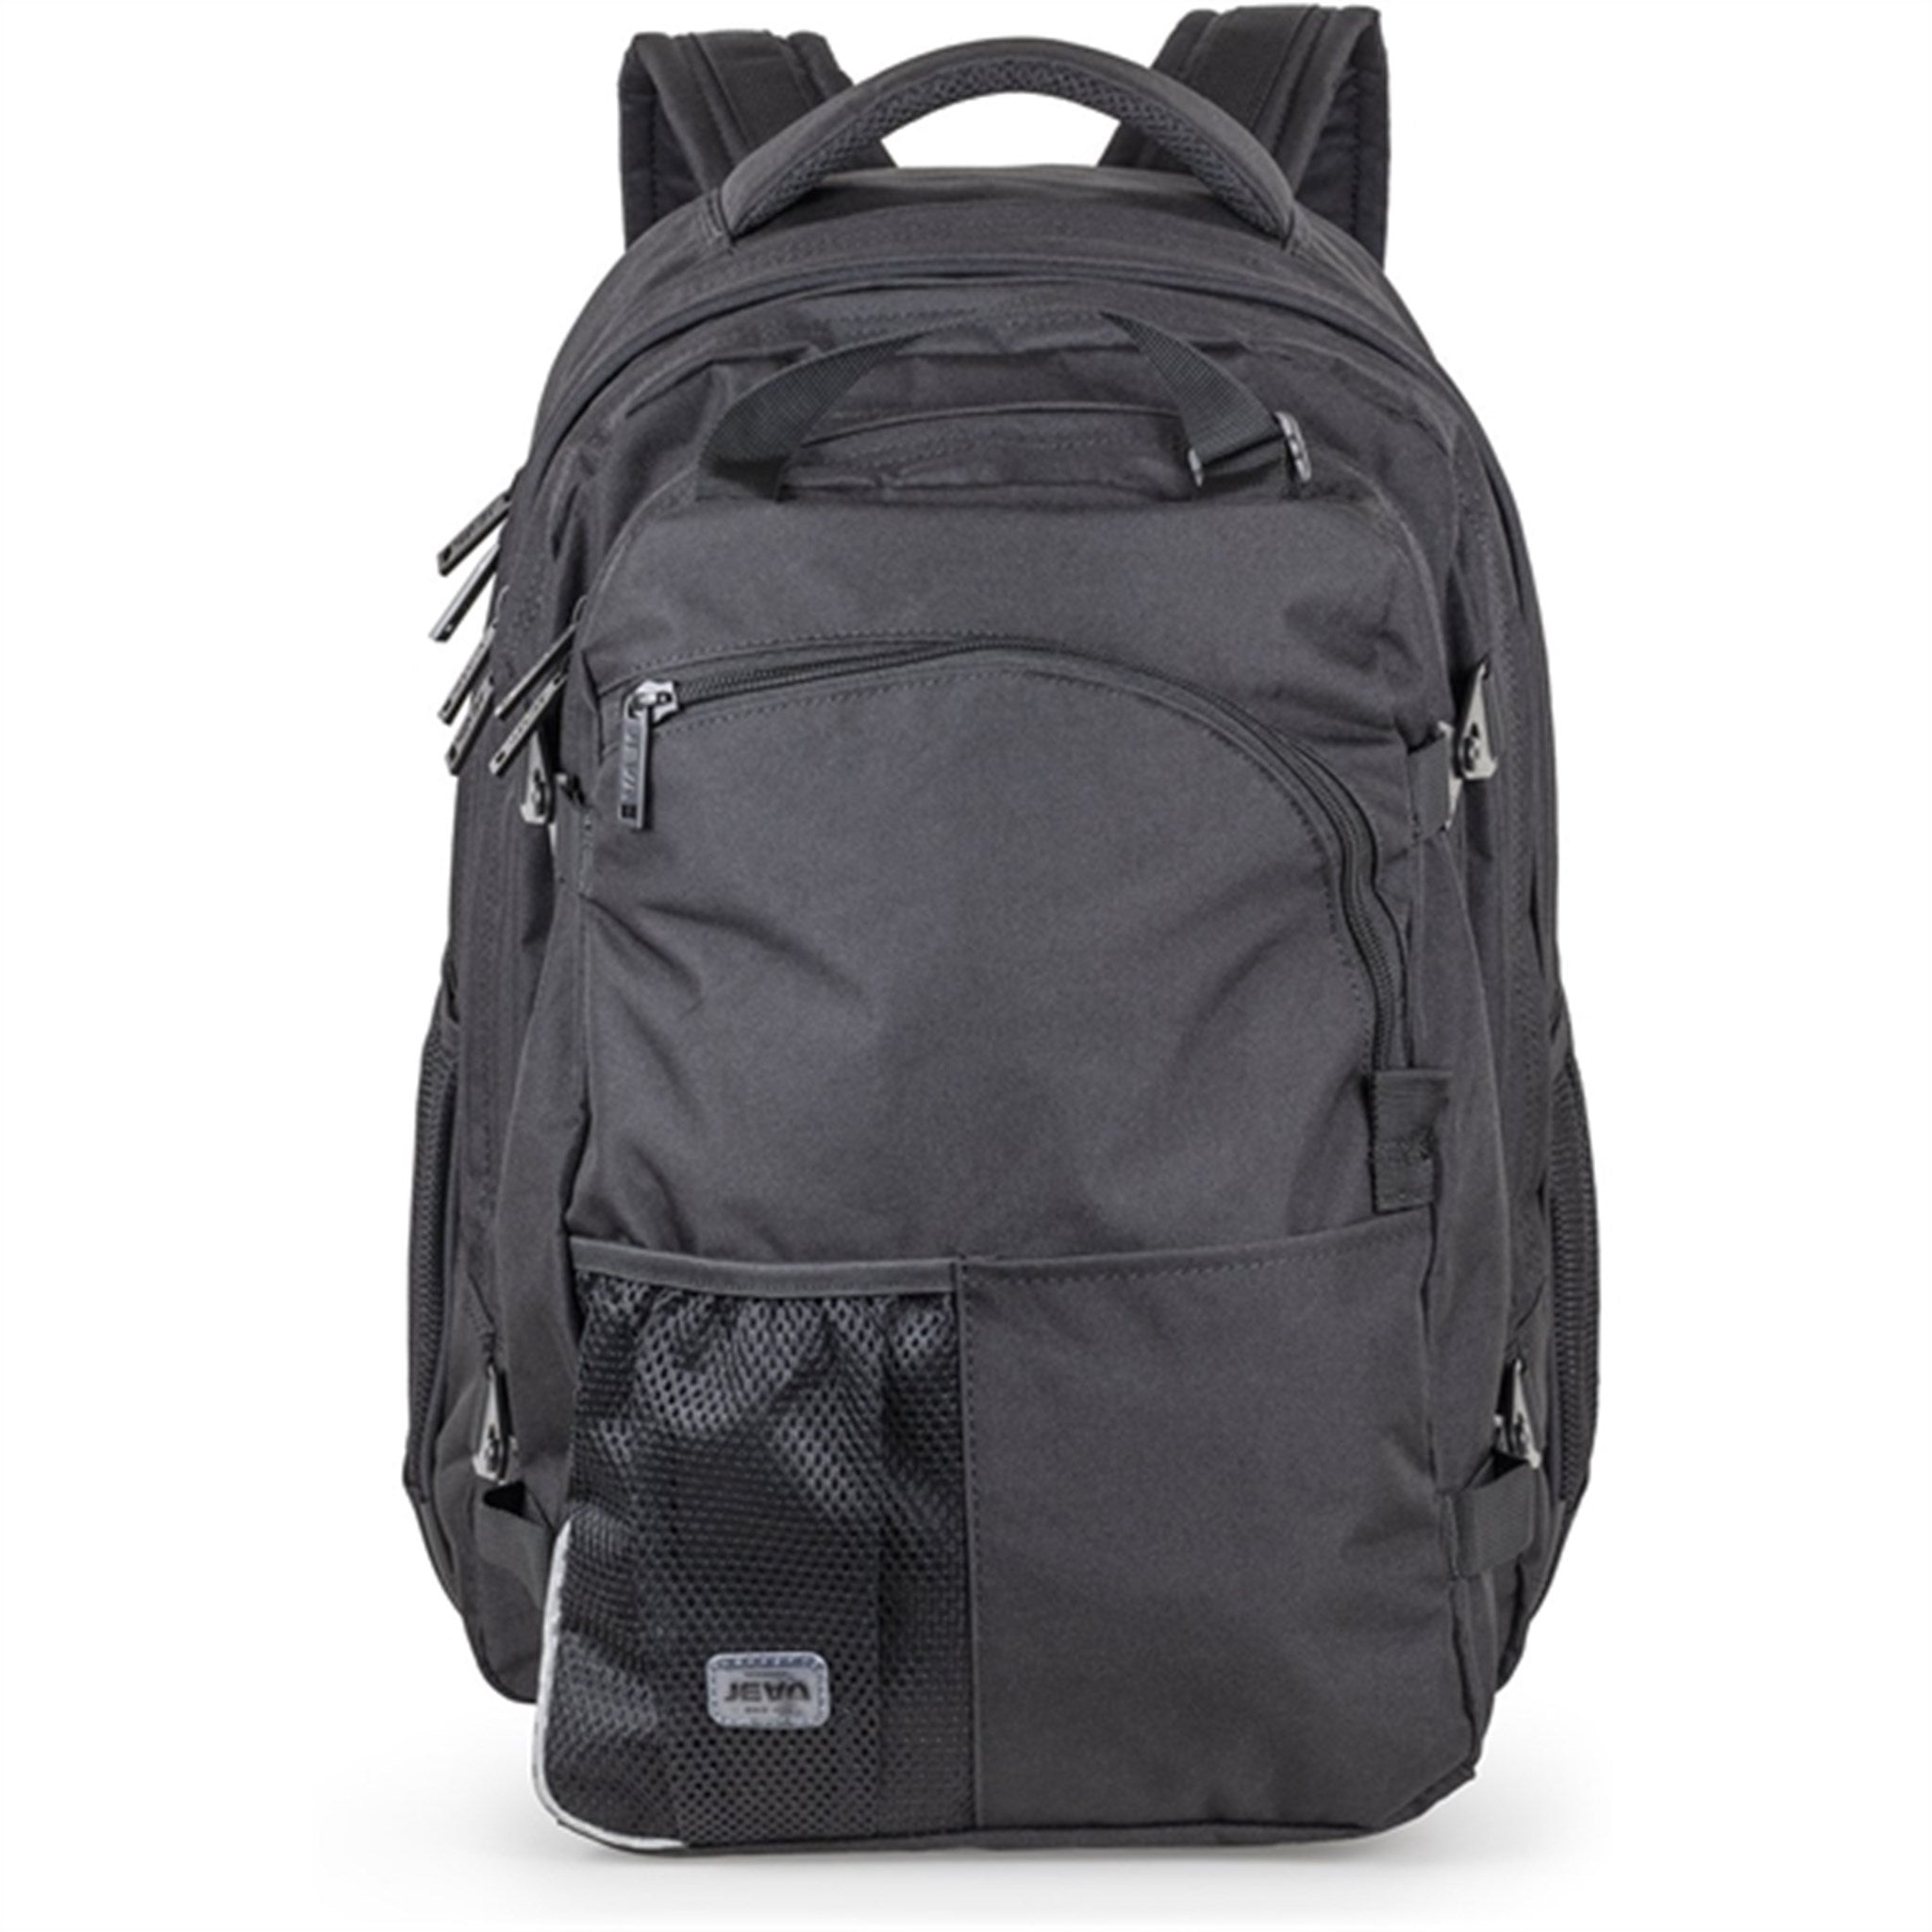 JEVA Backpack Black 2